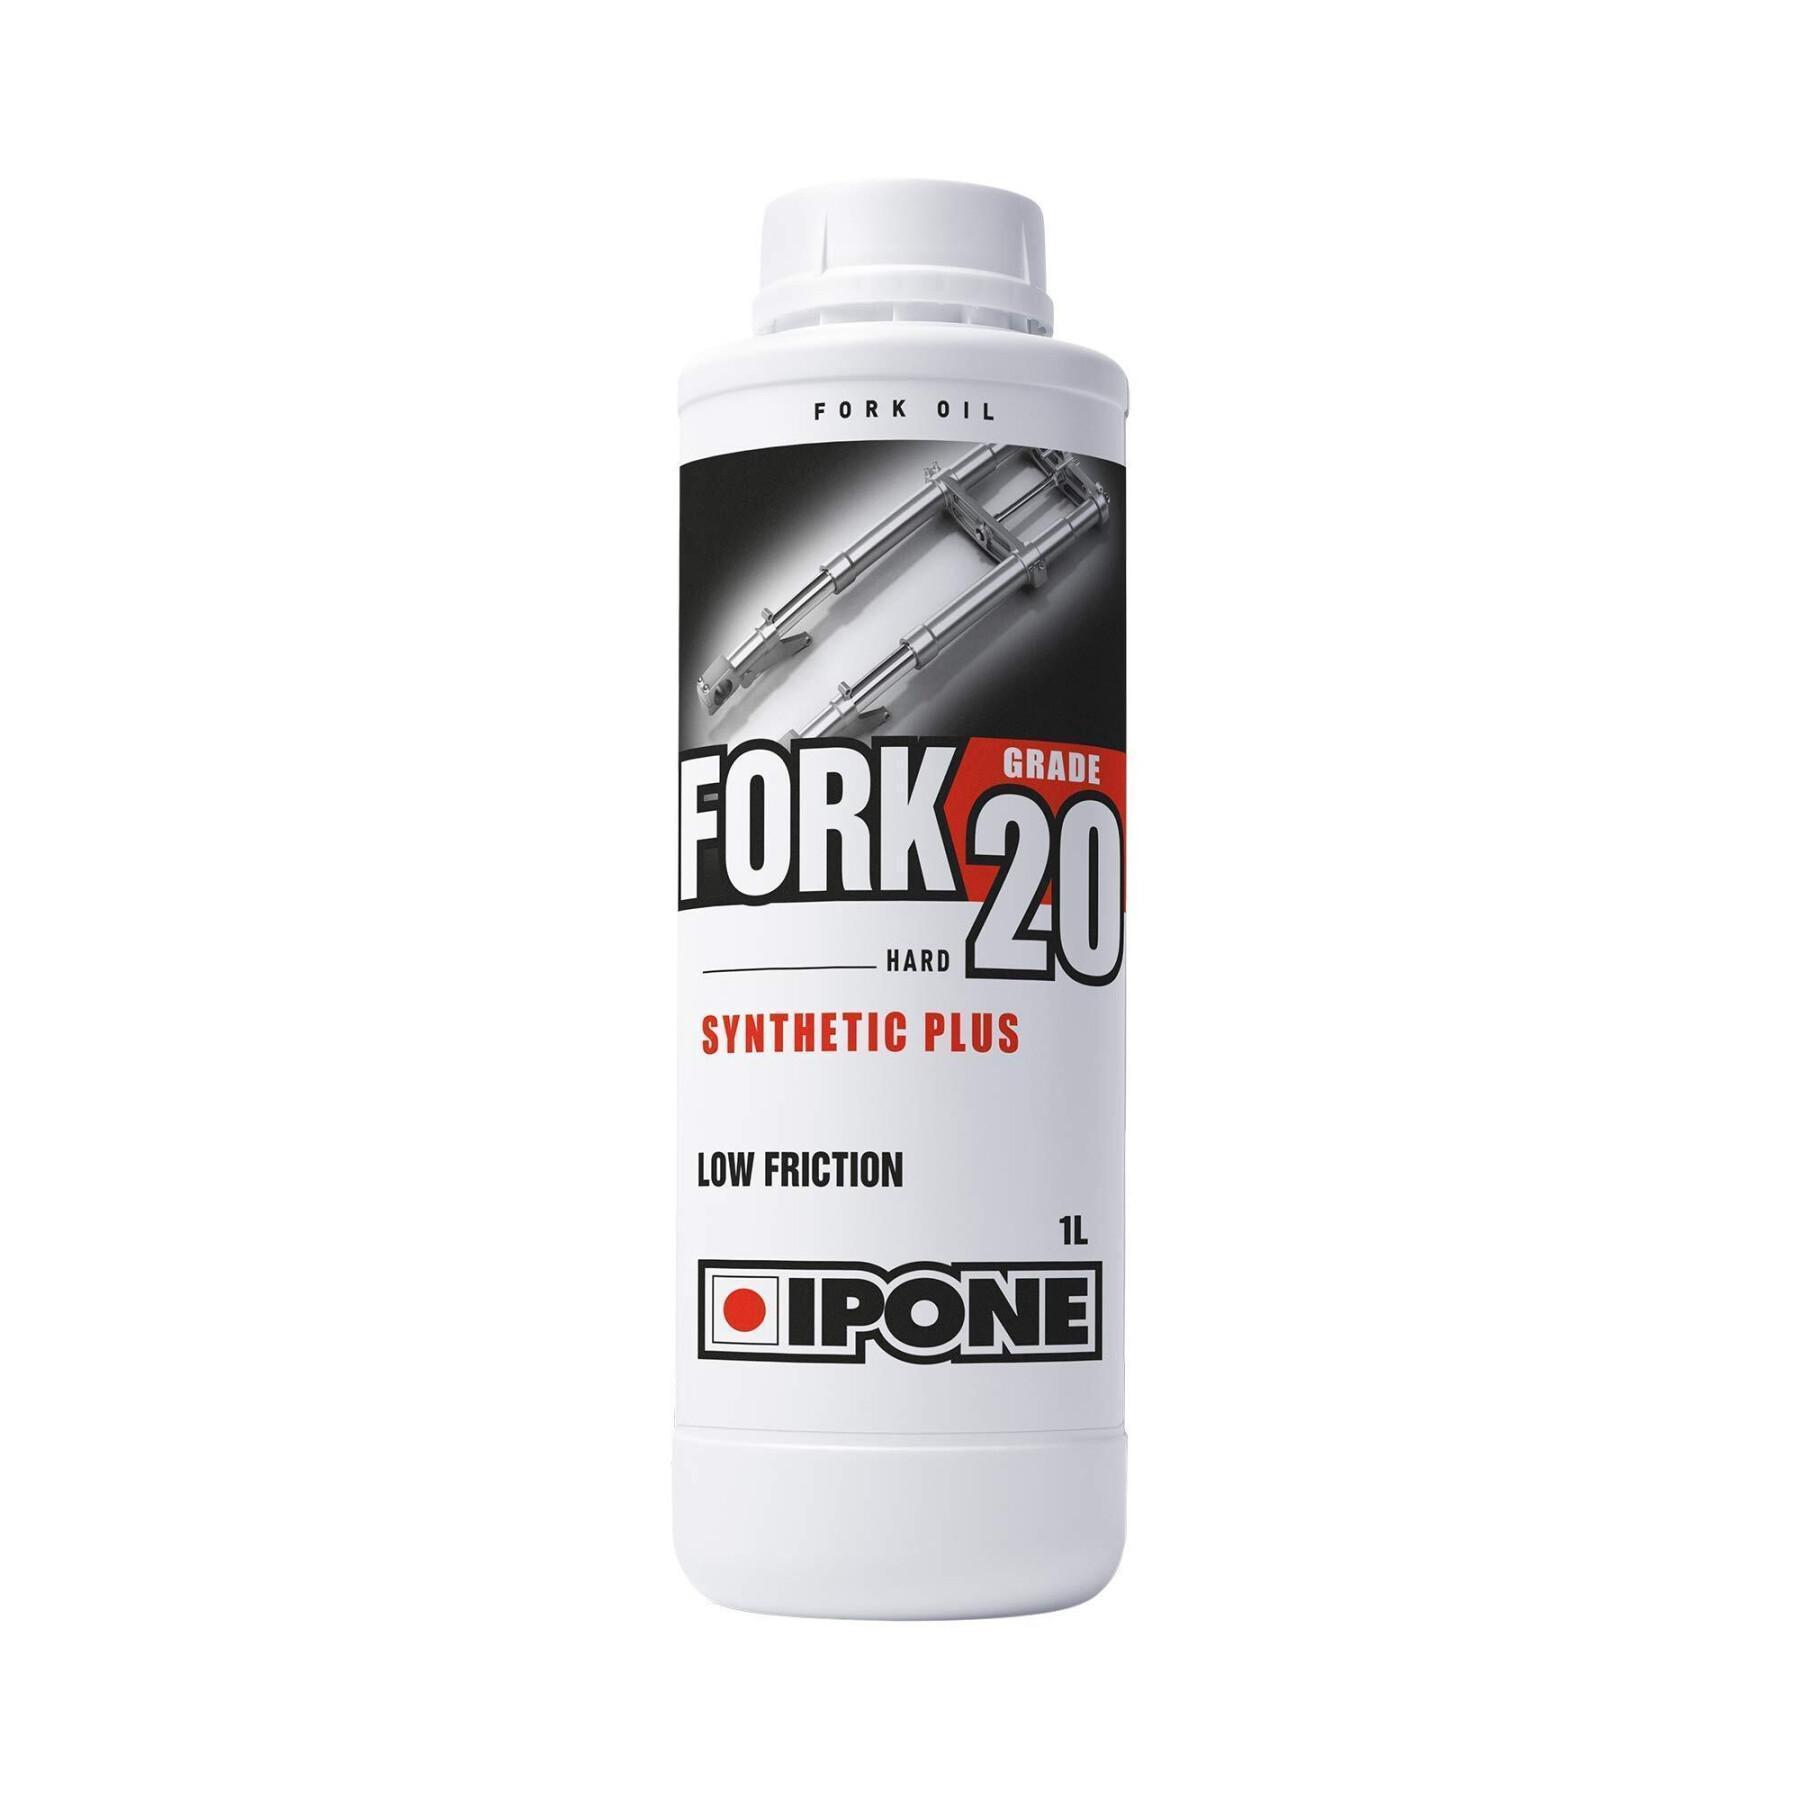 Fork oil ipone 20